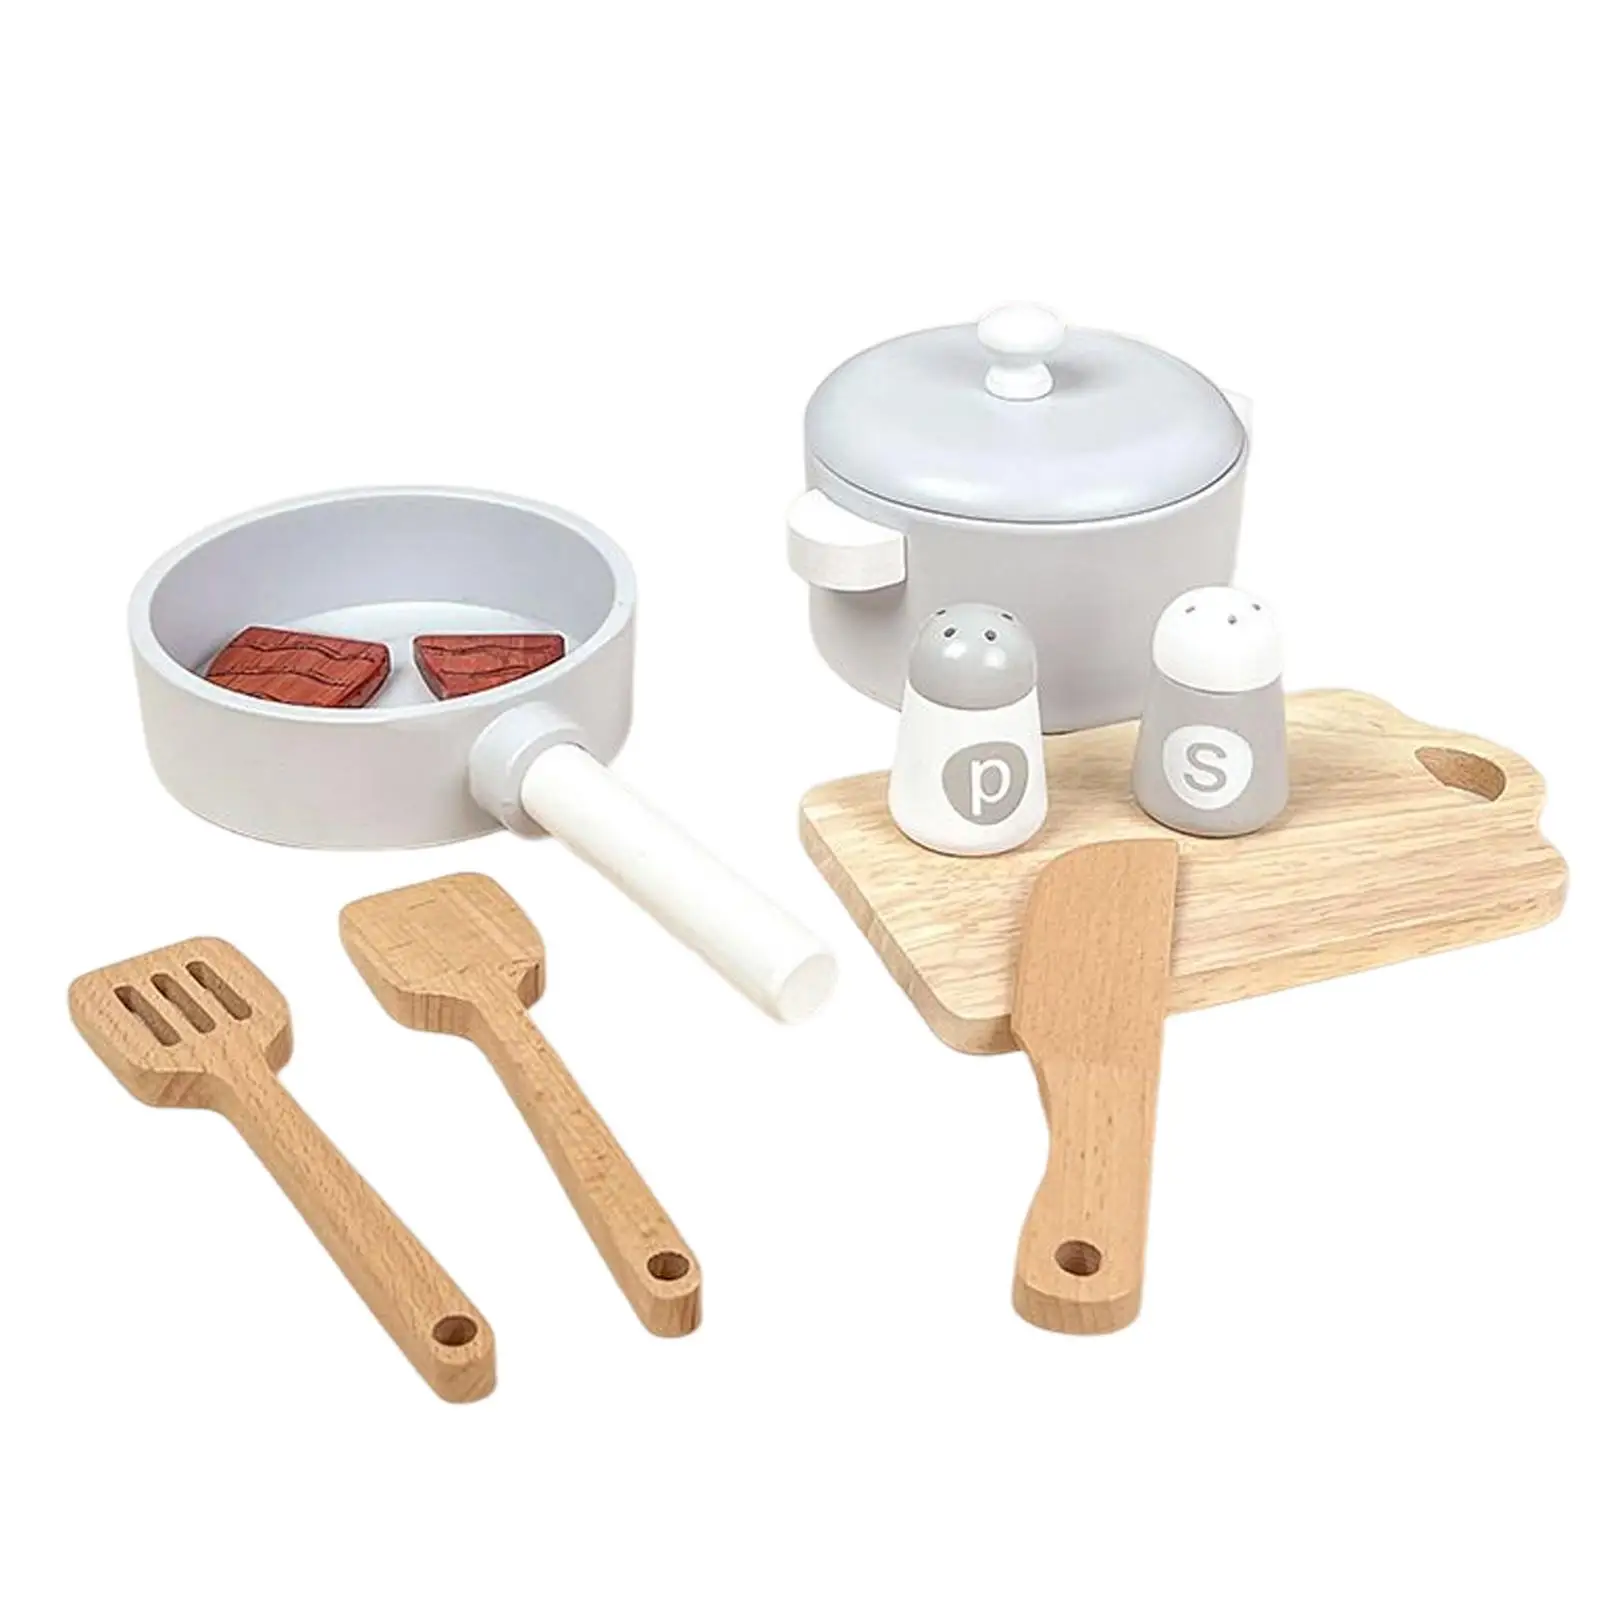 Kitchen Toyset Miniature Interest Development Wooden Toy Montessori Kitchen Toys Cooking toys for cooking Adults